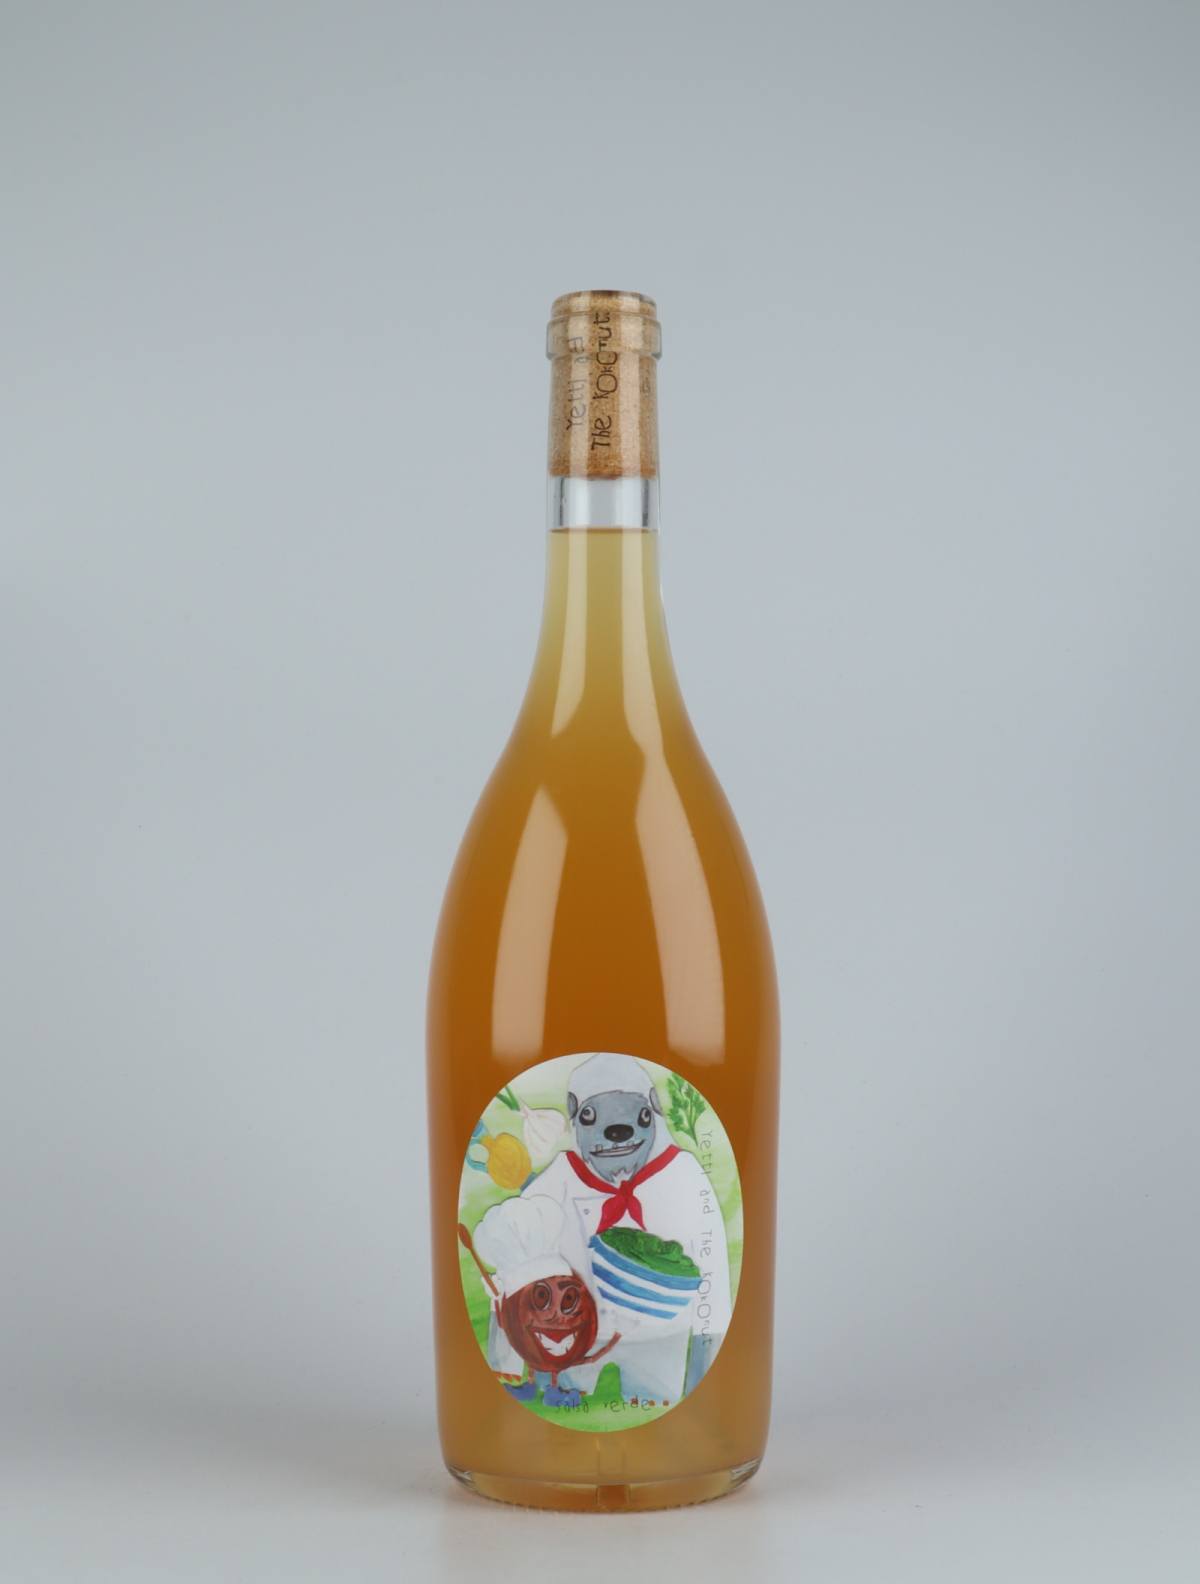 A bottle 2020 Salsa Verde White wine from Yetti and the Kokonut, Adelaide Hills in Australia